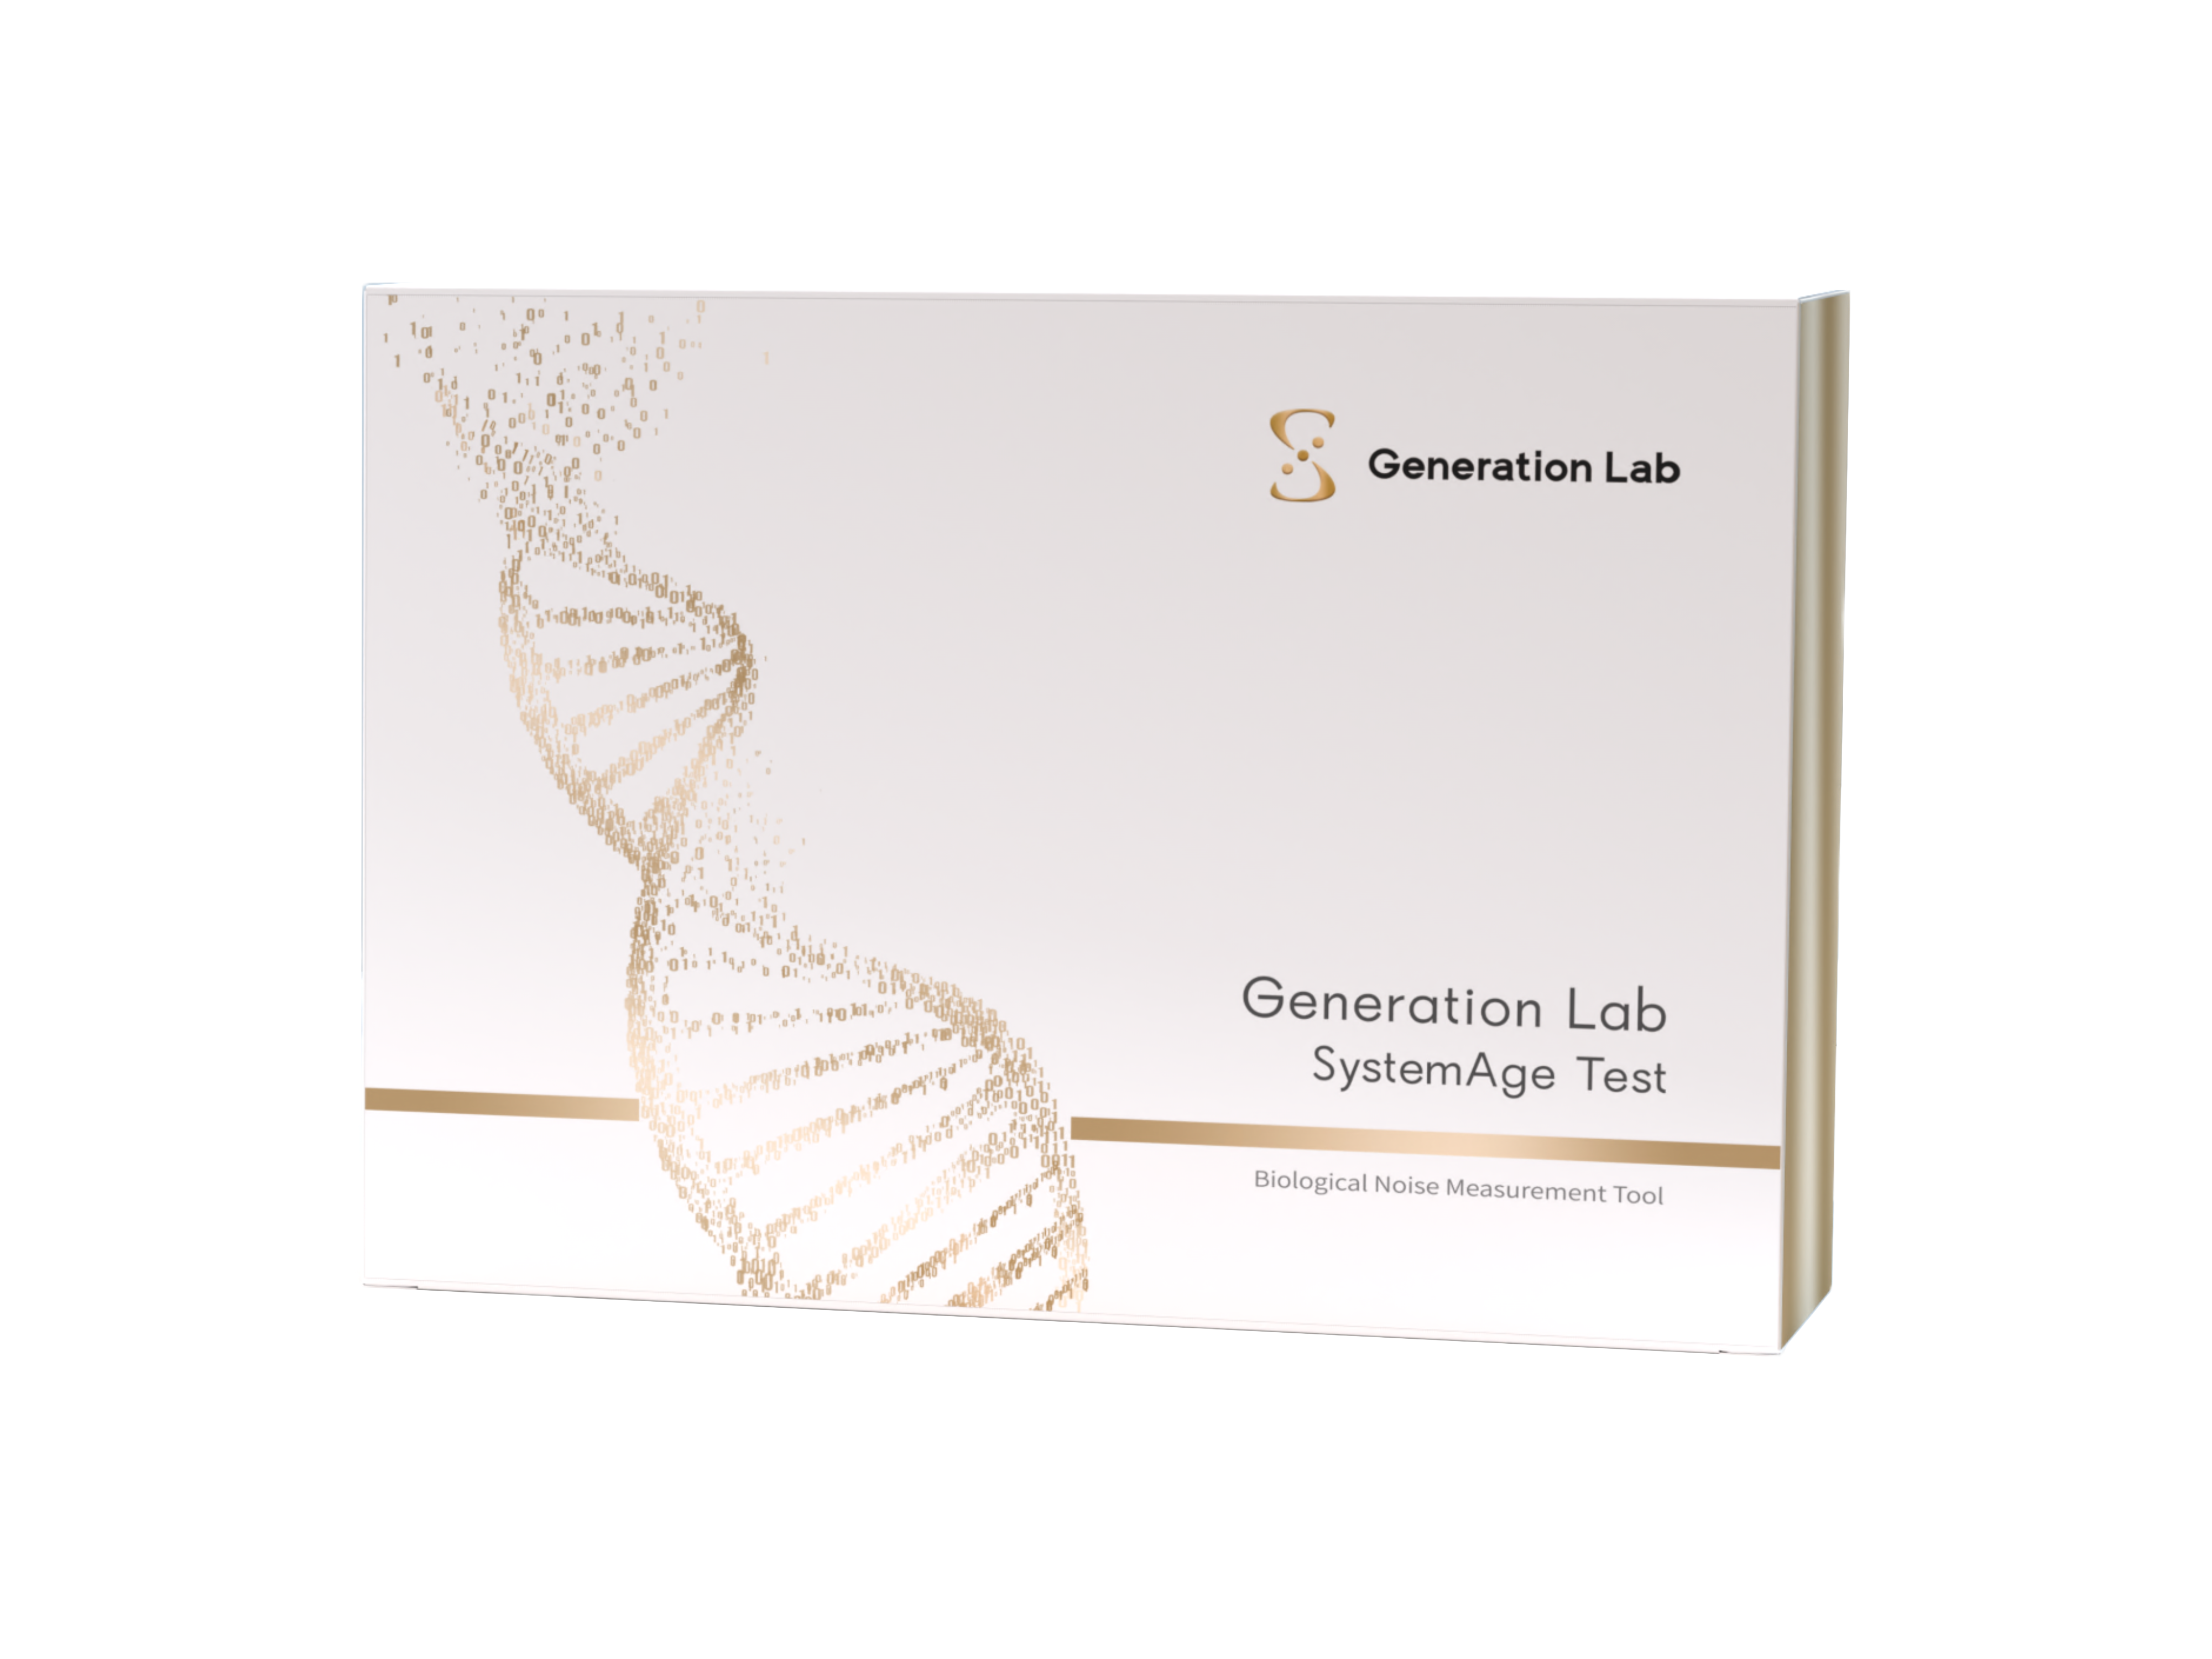 Generation Lab has partnered with dozens of longevity clinics across the U.S. who are making the Generation Lab Longevity Platform available to patients.